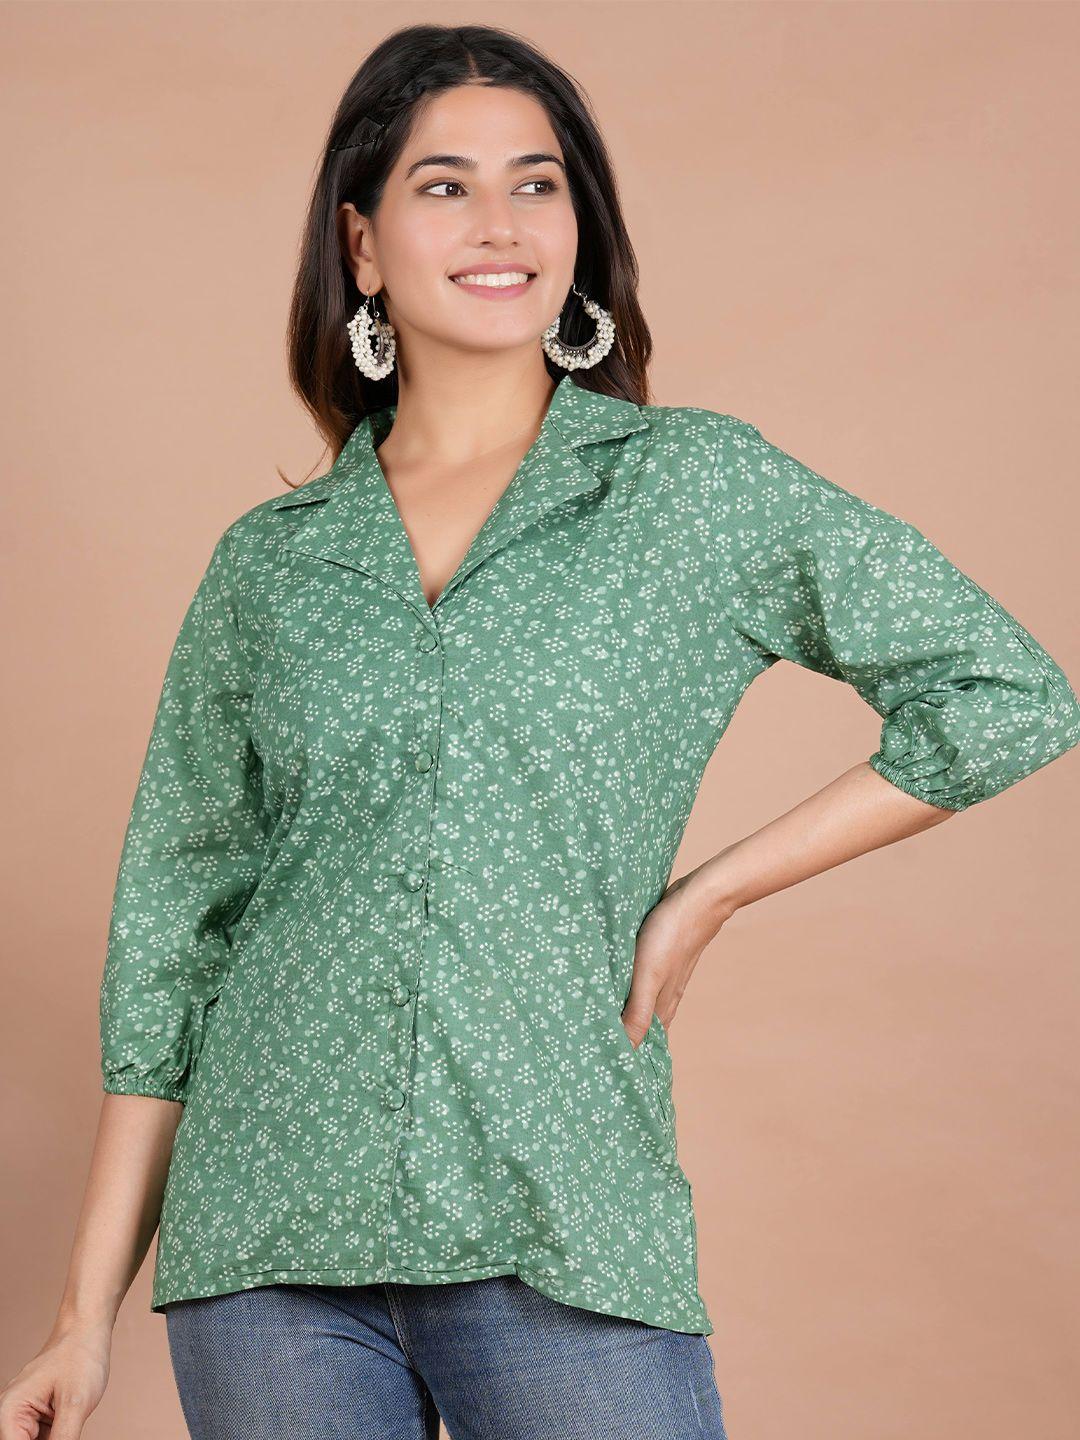 zoyoto green print ethnic cotton shirt style top